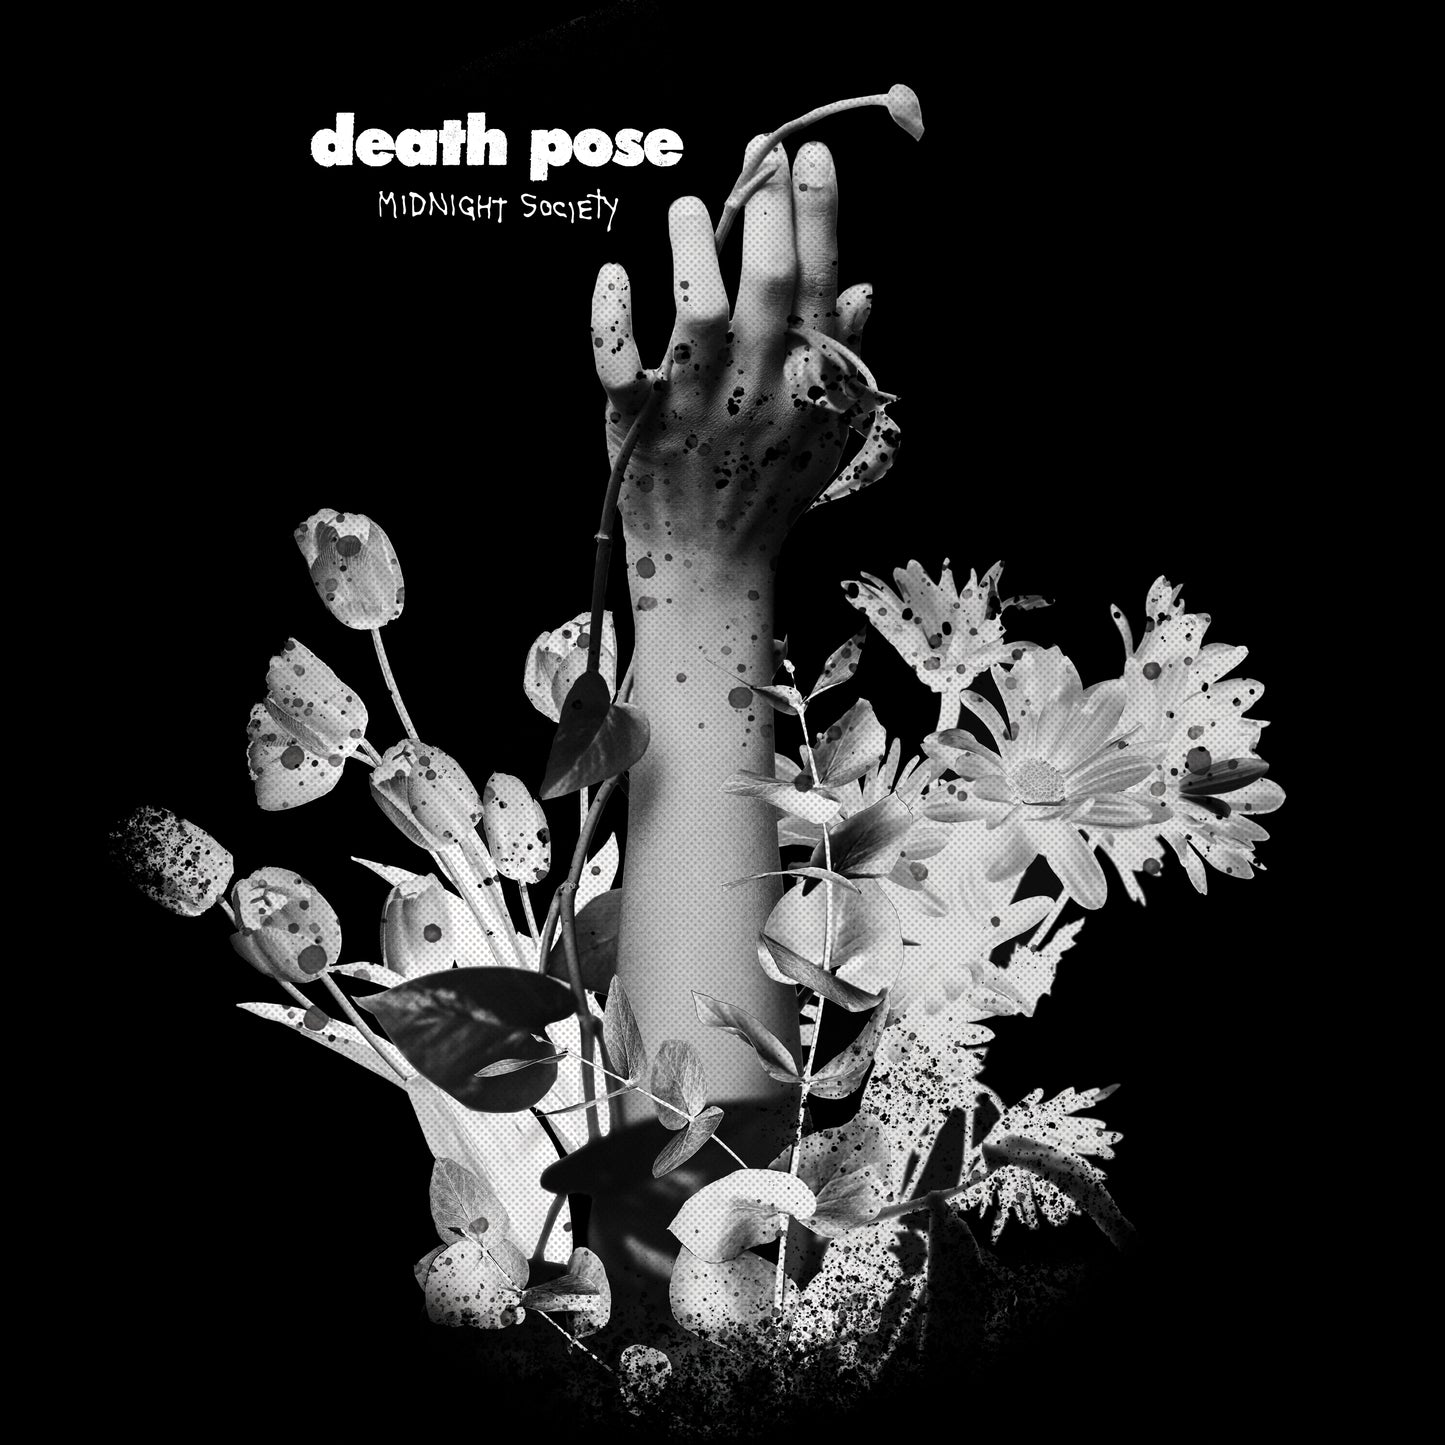 death pose - Midnight Society - Cassette Tape